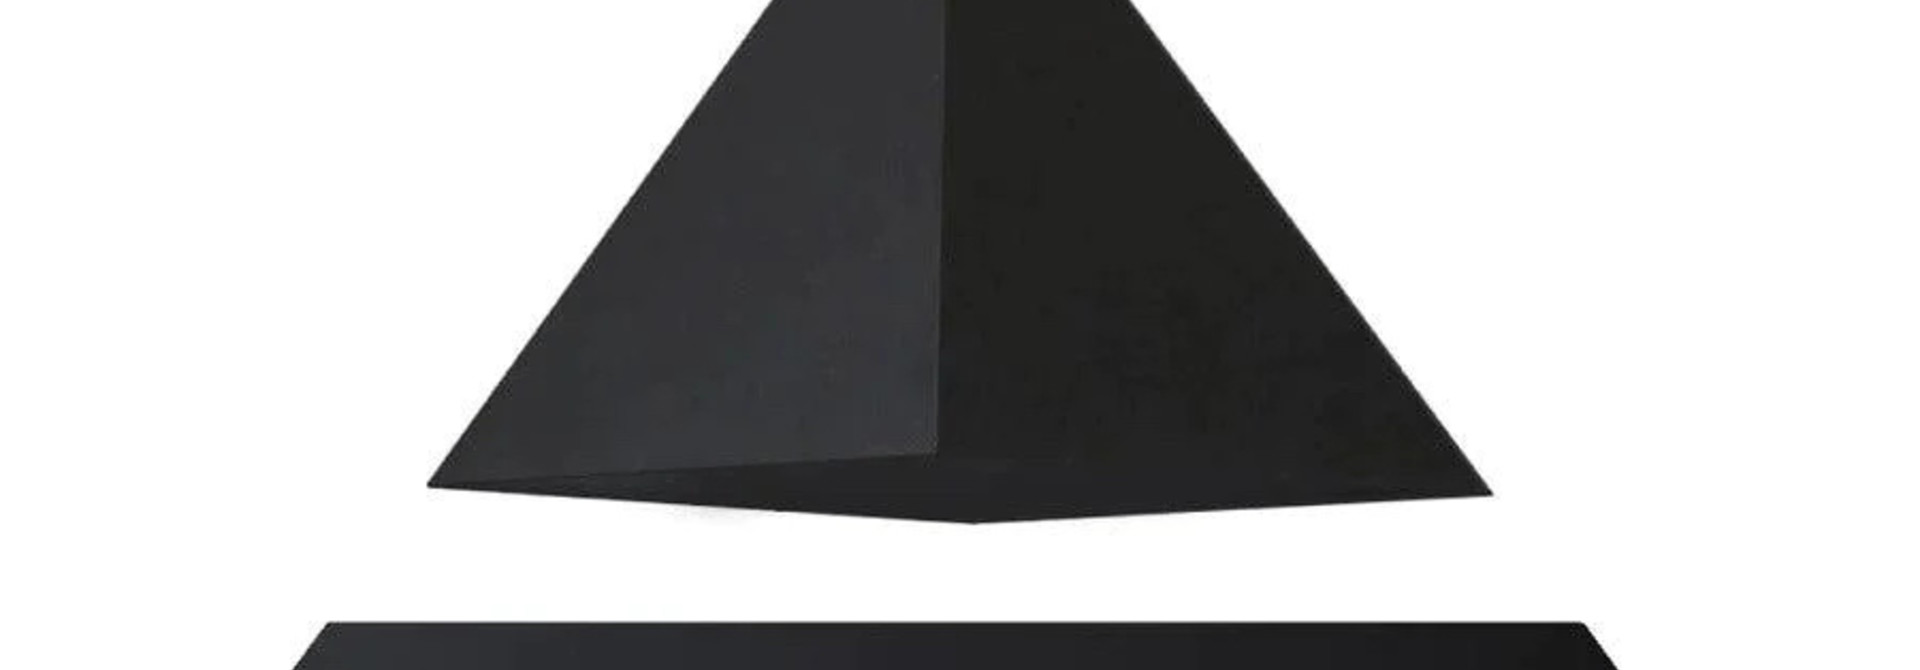 Py Levitating Pyramid Black